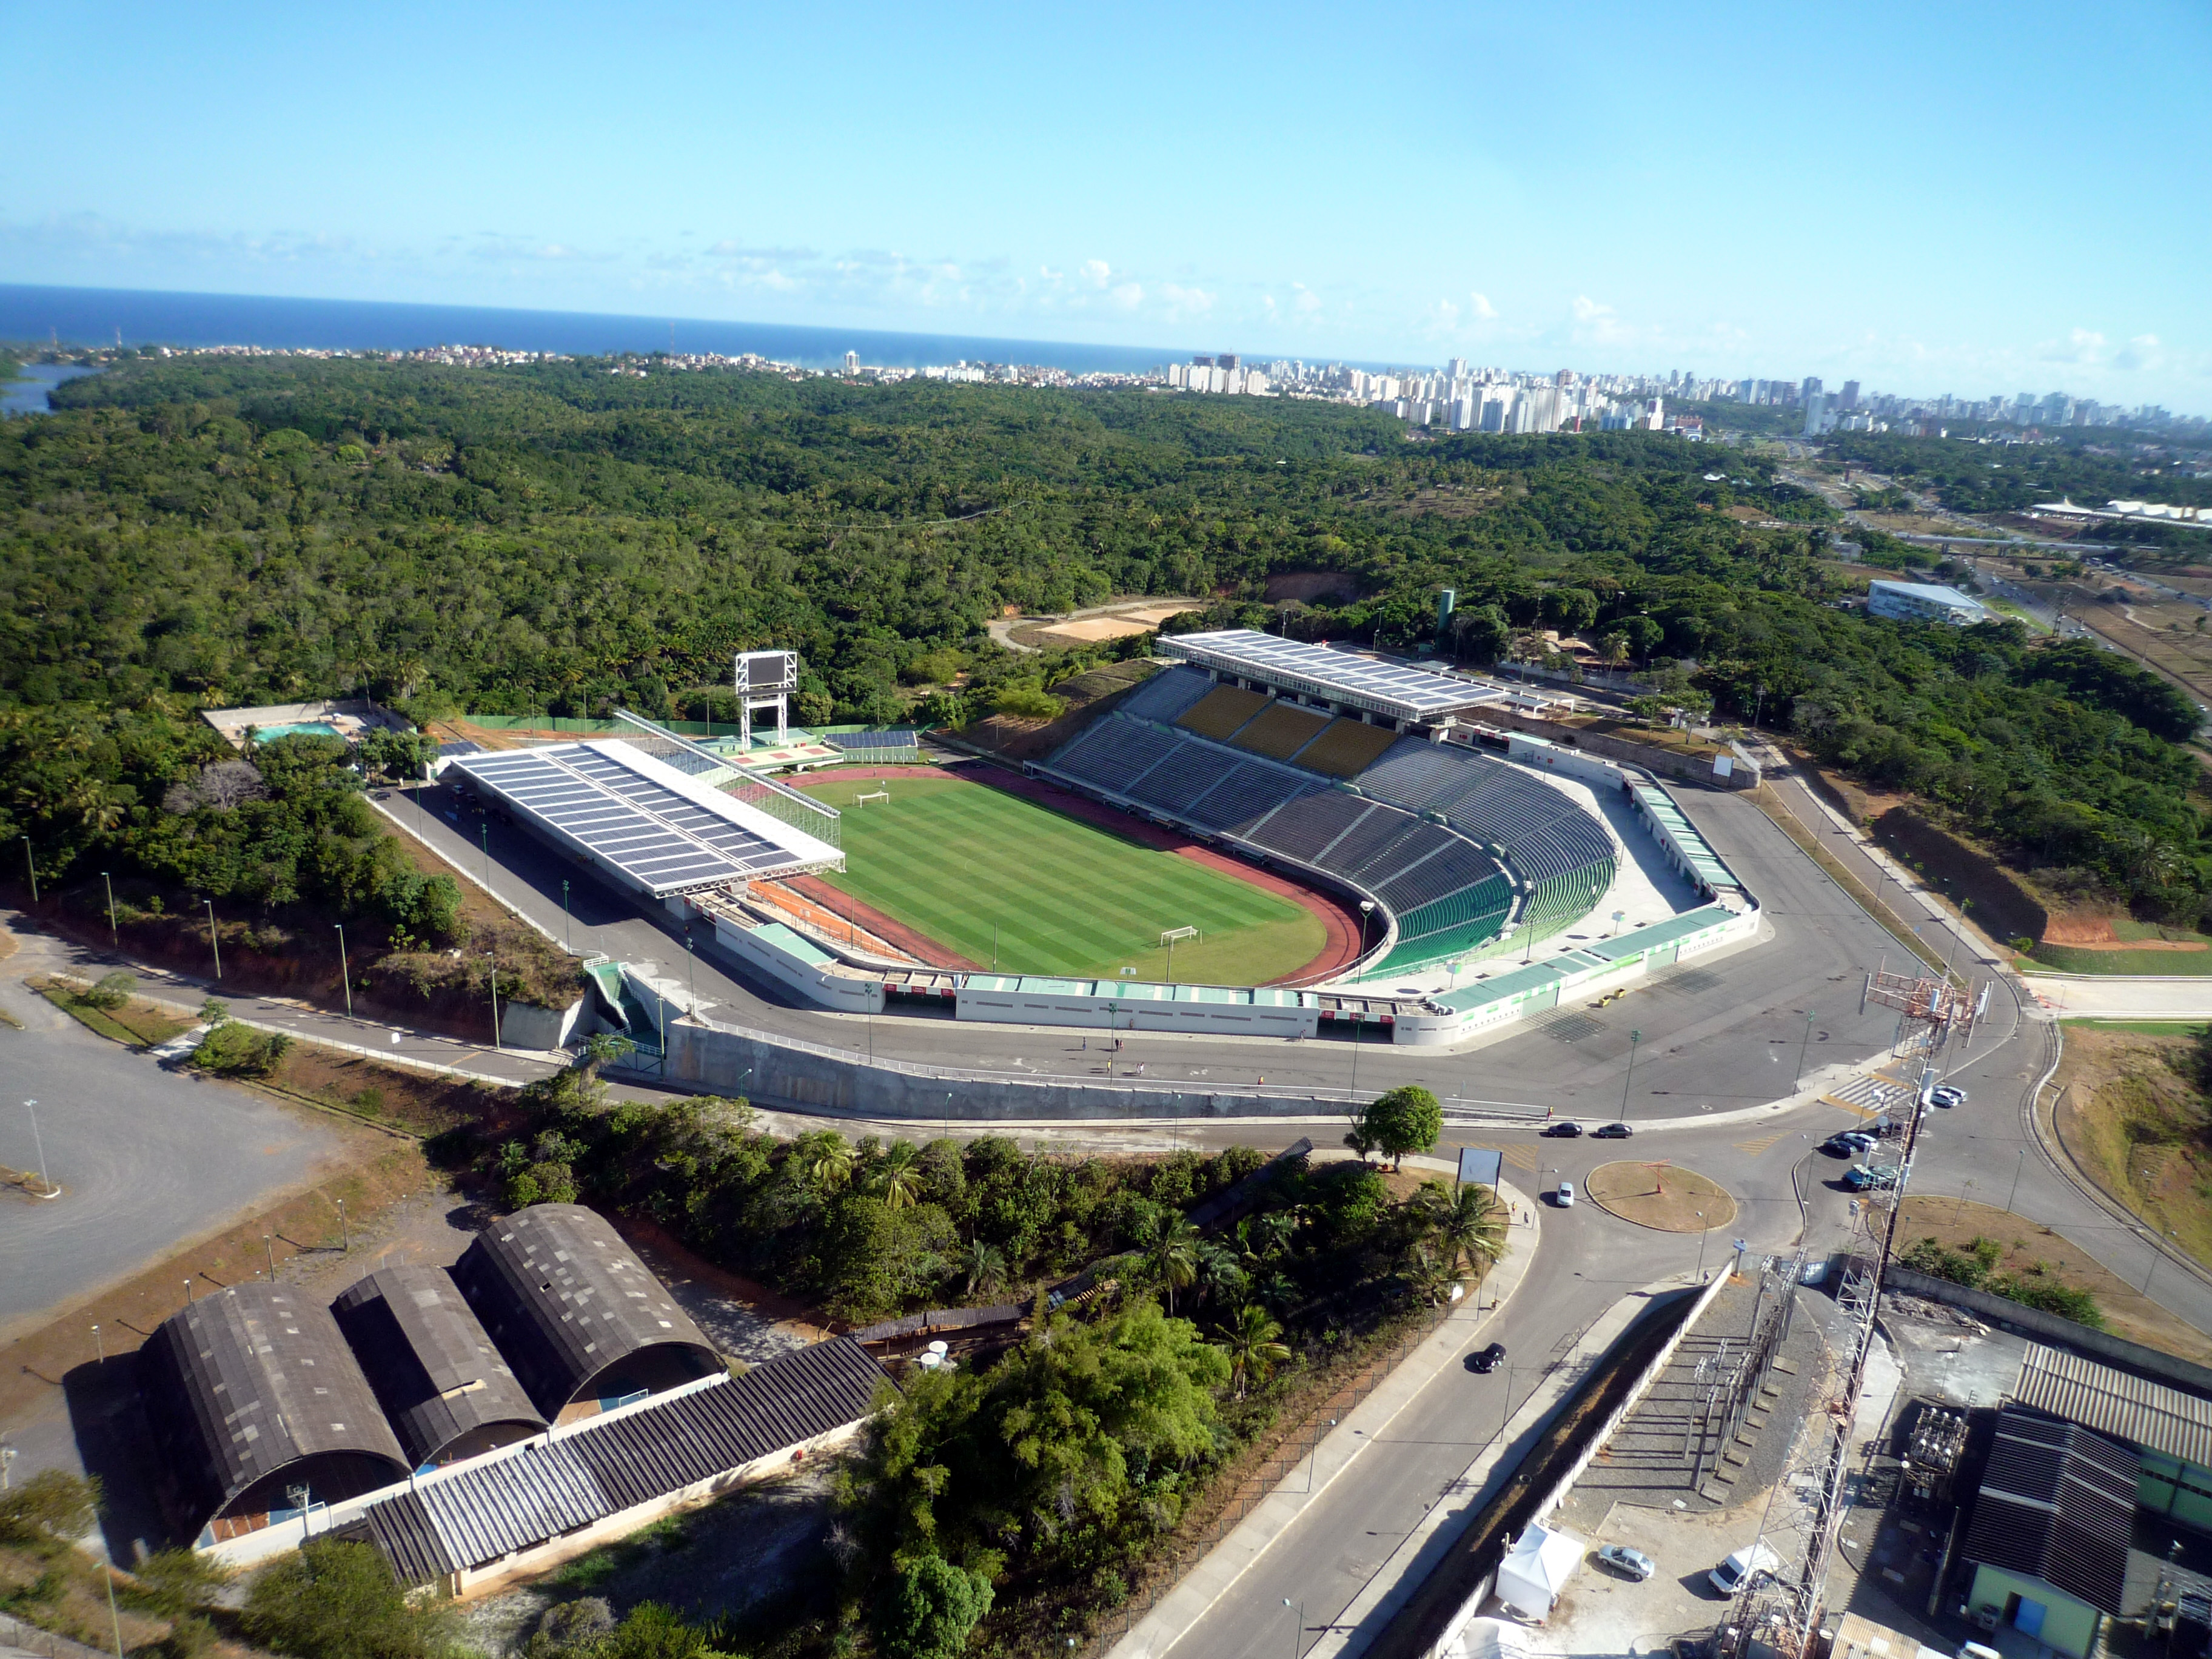 Football stadium in Salvador da Bahia equipped with solar panels